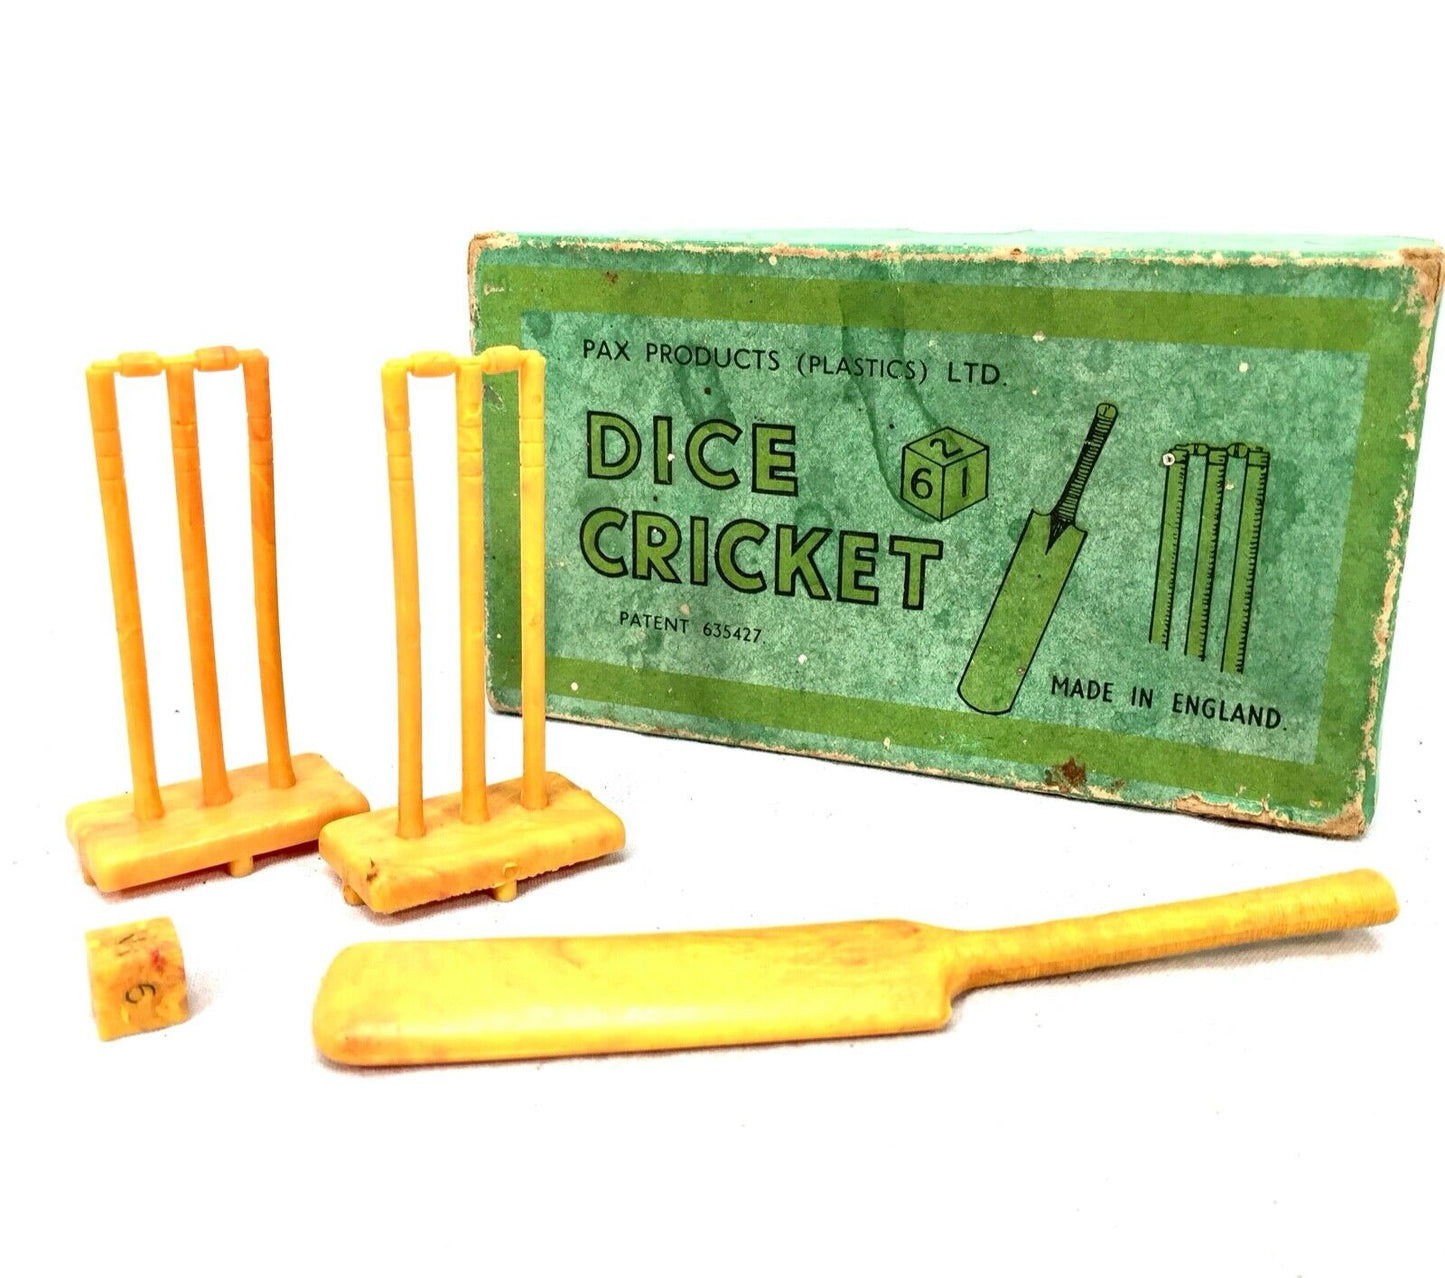 Vintage Tabletop Dice & Cricket Game in Original Box / Board Game / Antique Toy